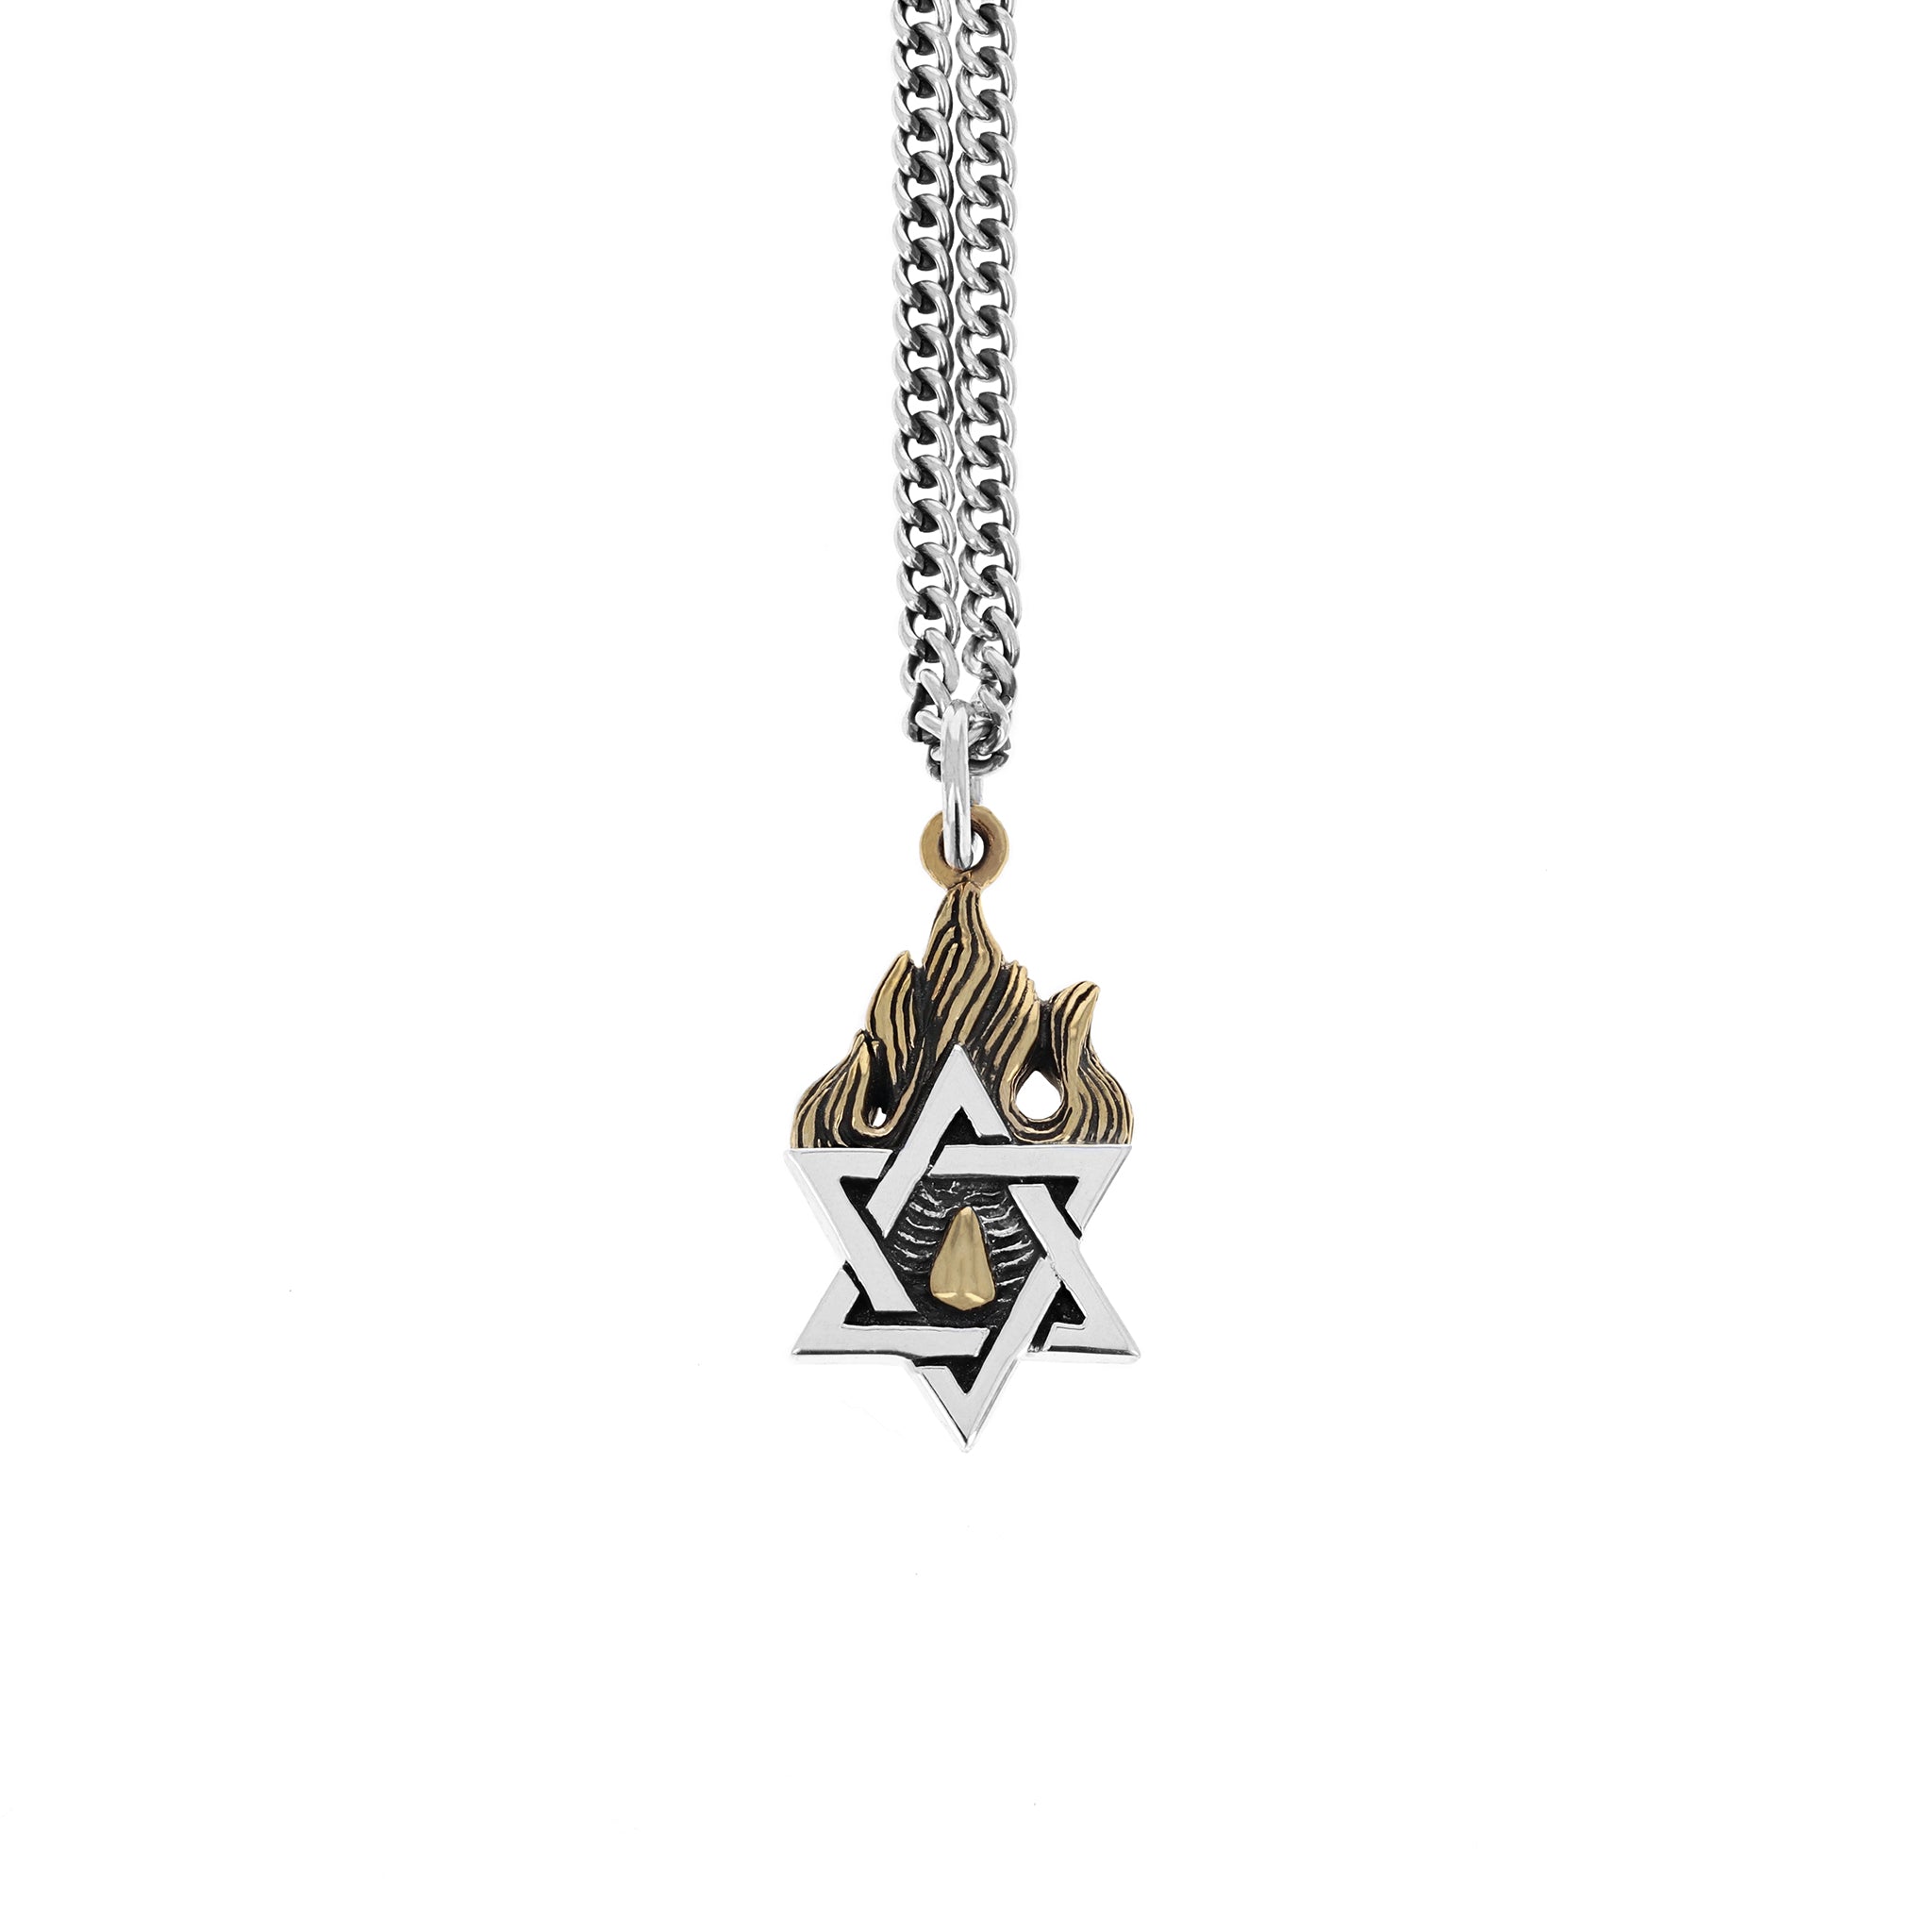 David Yurman | Jewelry | David Yurman Amethyst Stone Star Necklace Size Is  Approximately 8 Inches | Poshmark